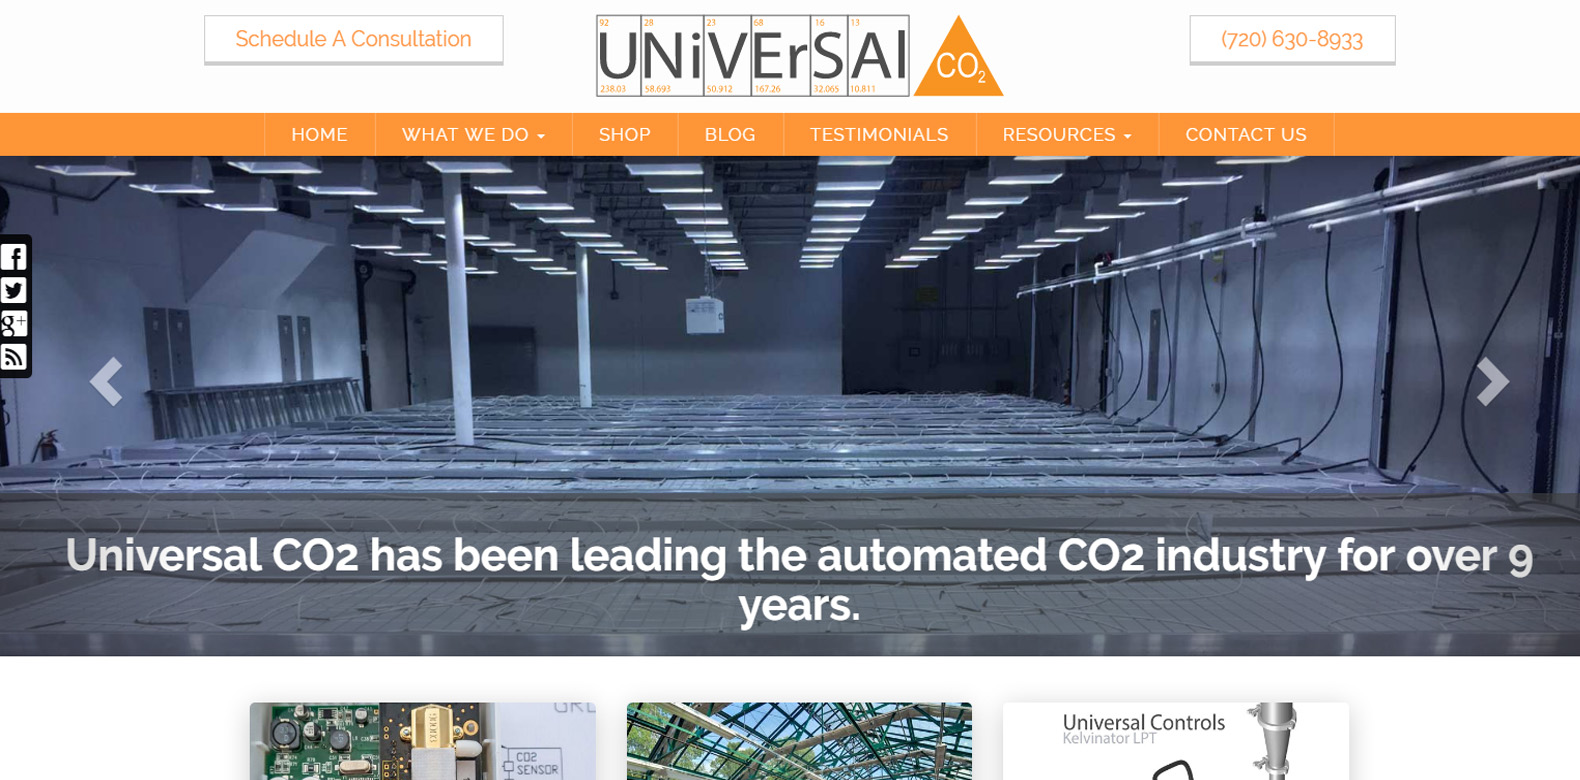 
New Website Launch: Universal CO2